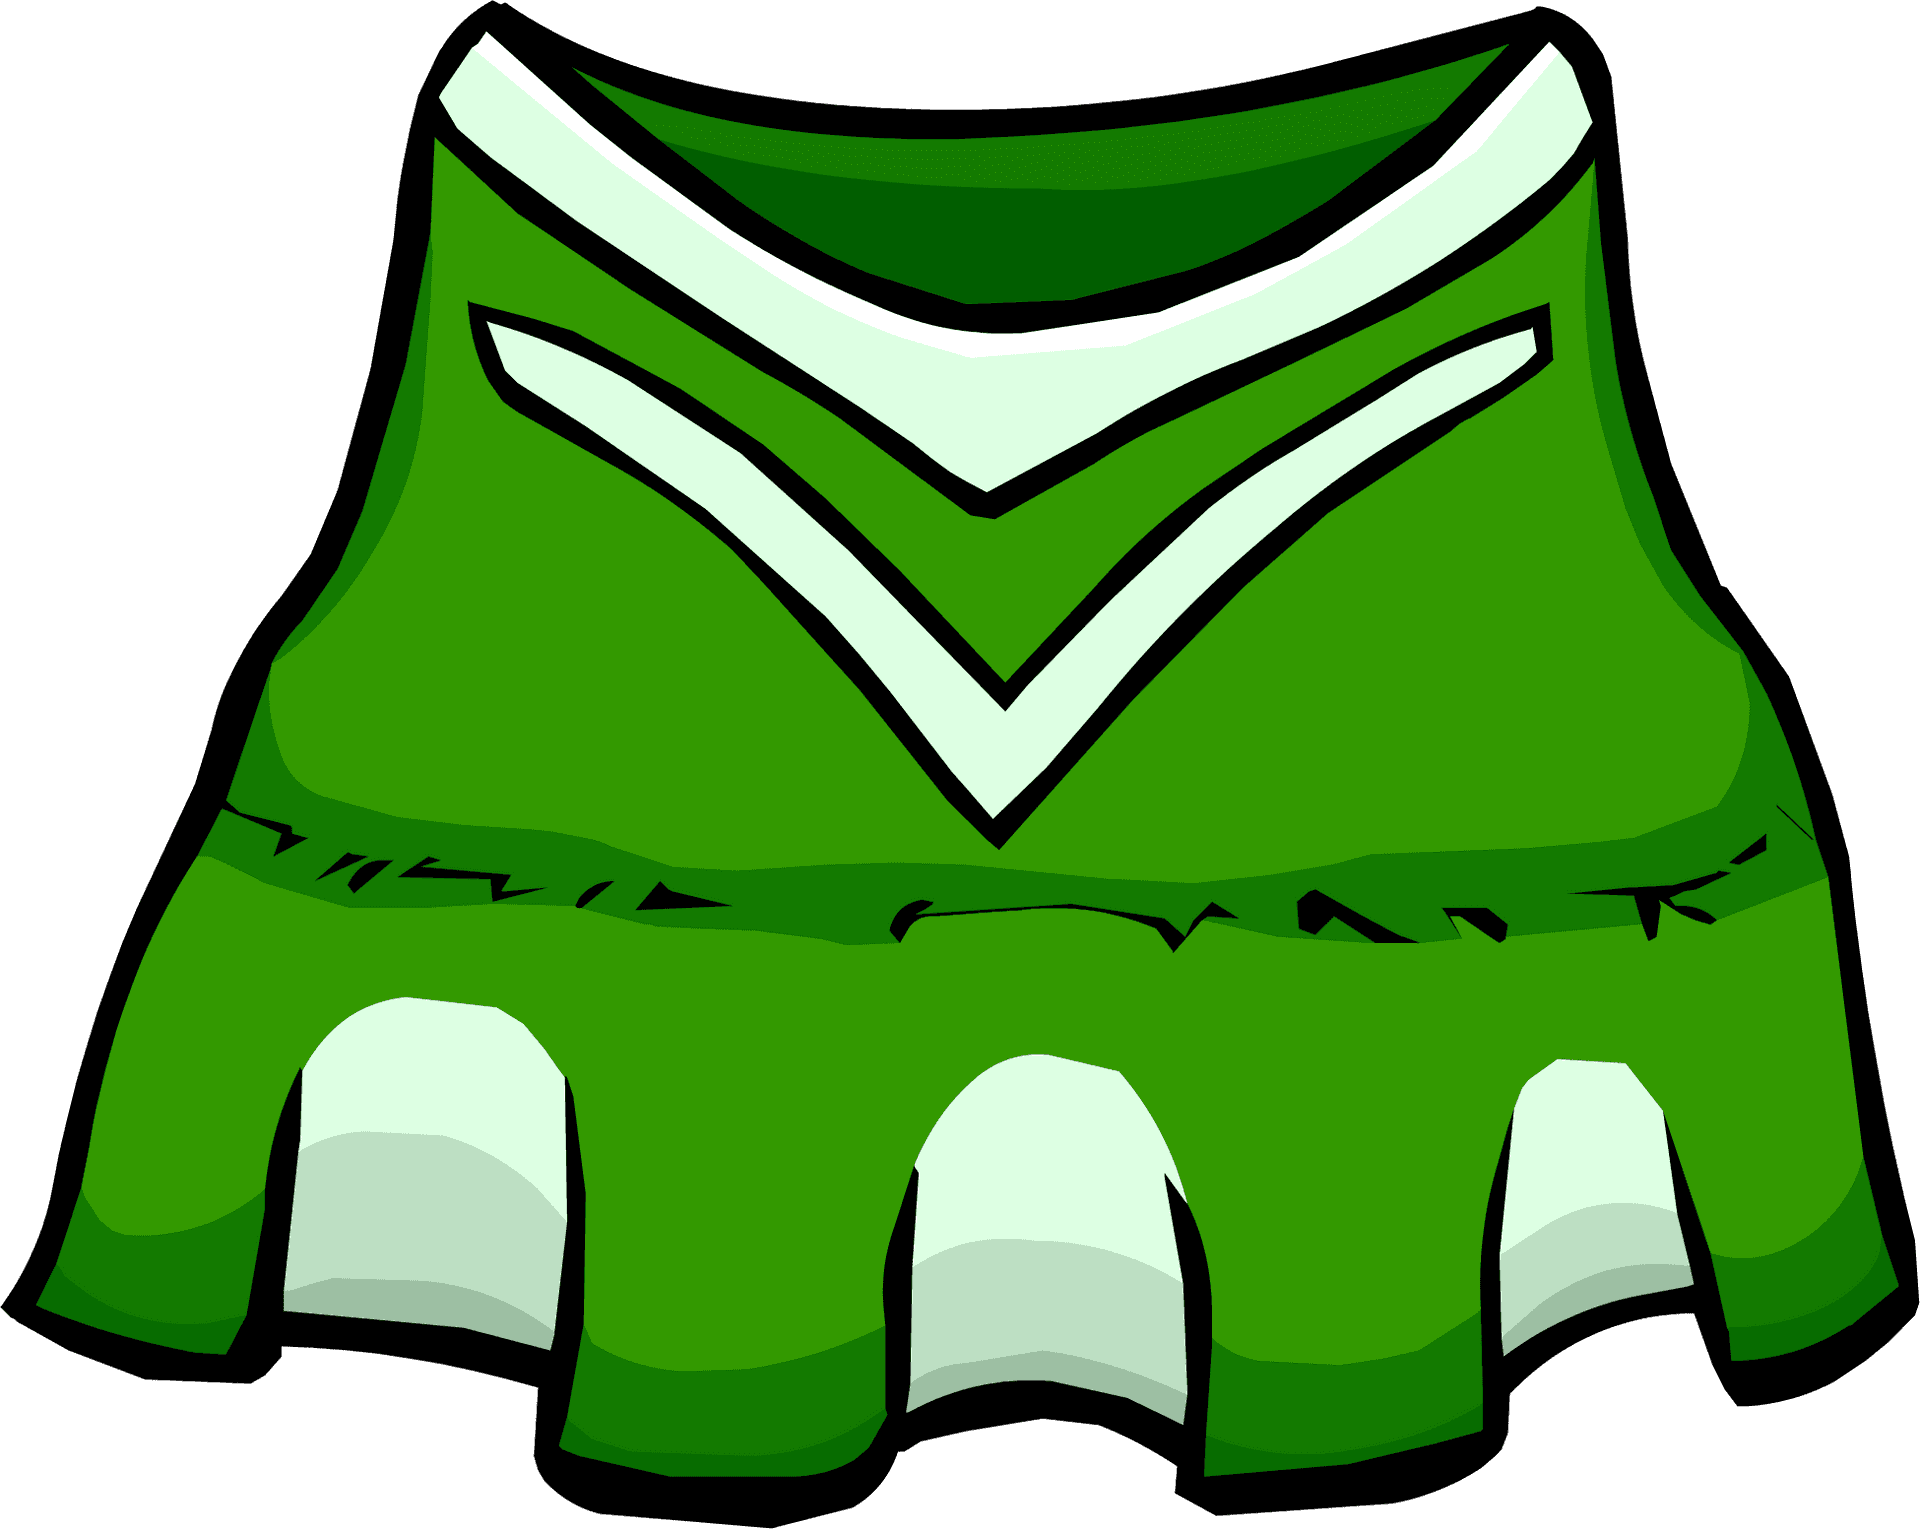 Green Cheerleader Skirt Illustration PNG image